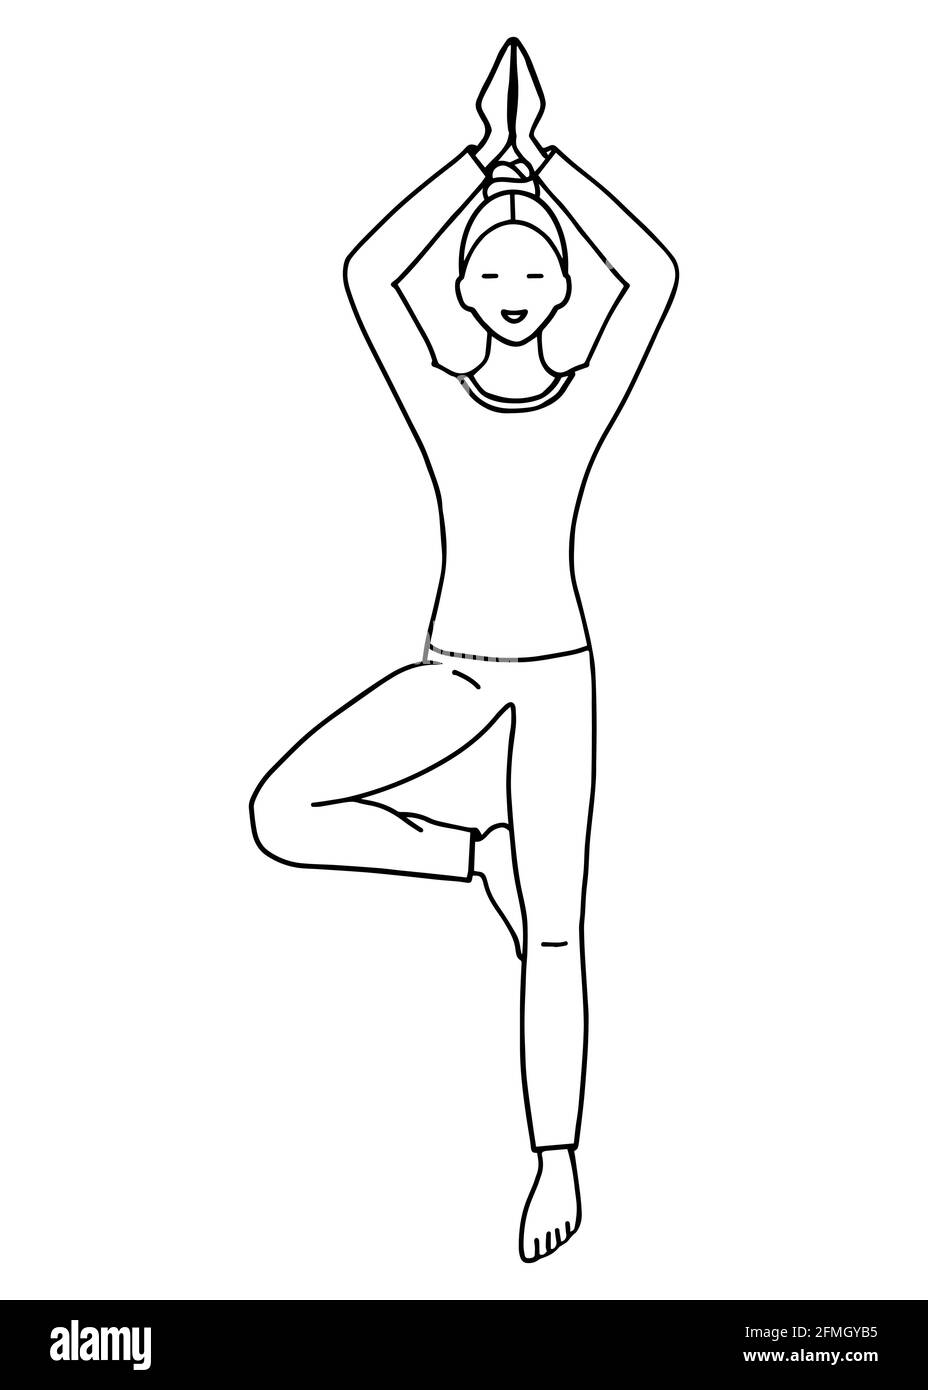 Eine hübsche Frau macht Yoga. Vektorgrafik im Doodle-Stil Stock Vektor